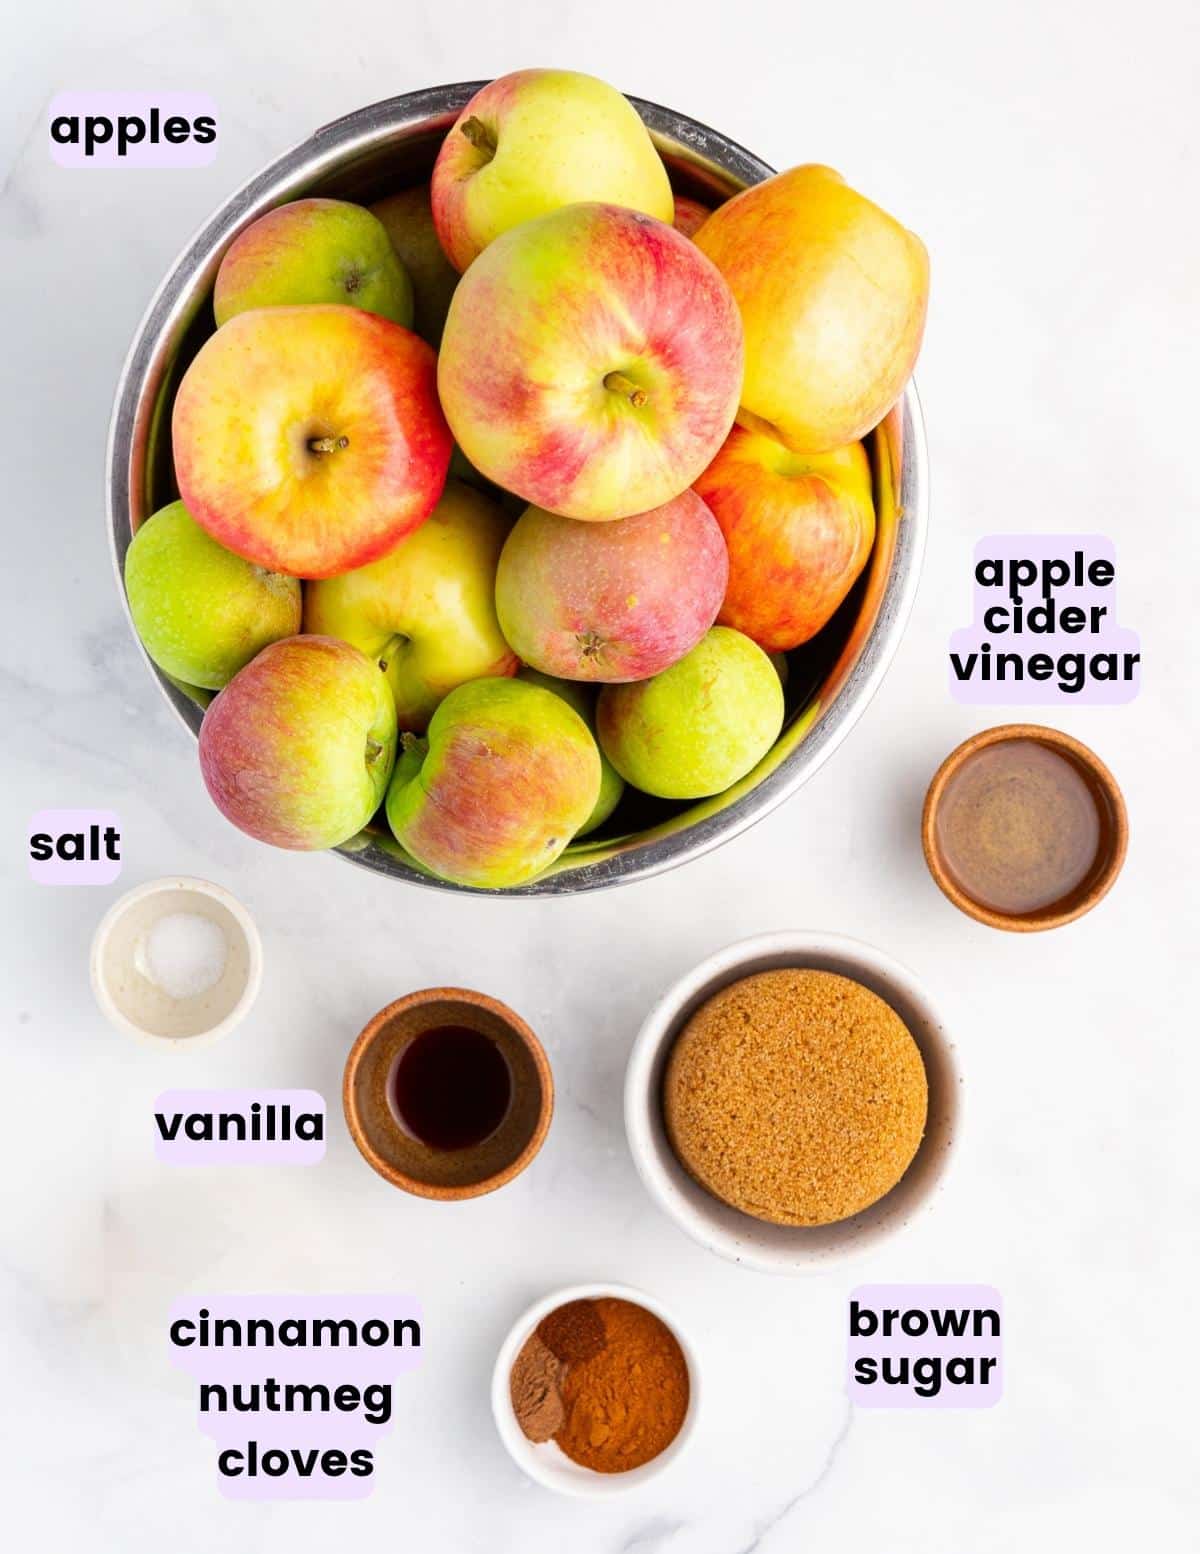 apples, salt, vanilla, brown sugar, spices, apple cider vinegar